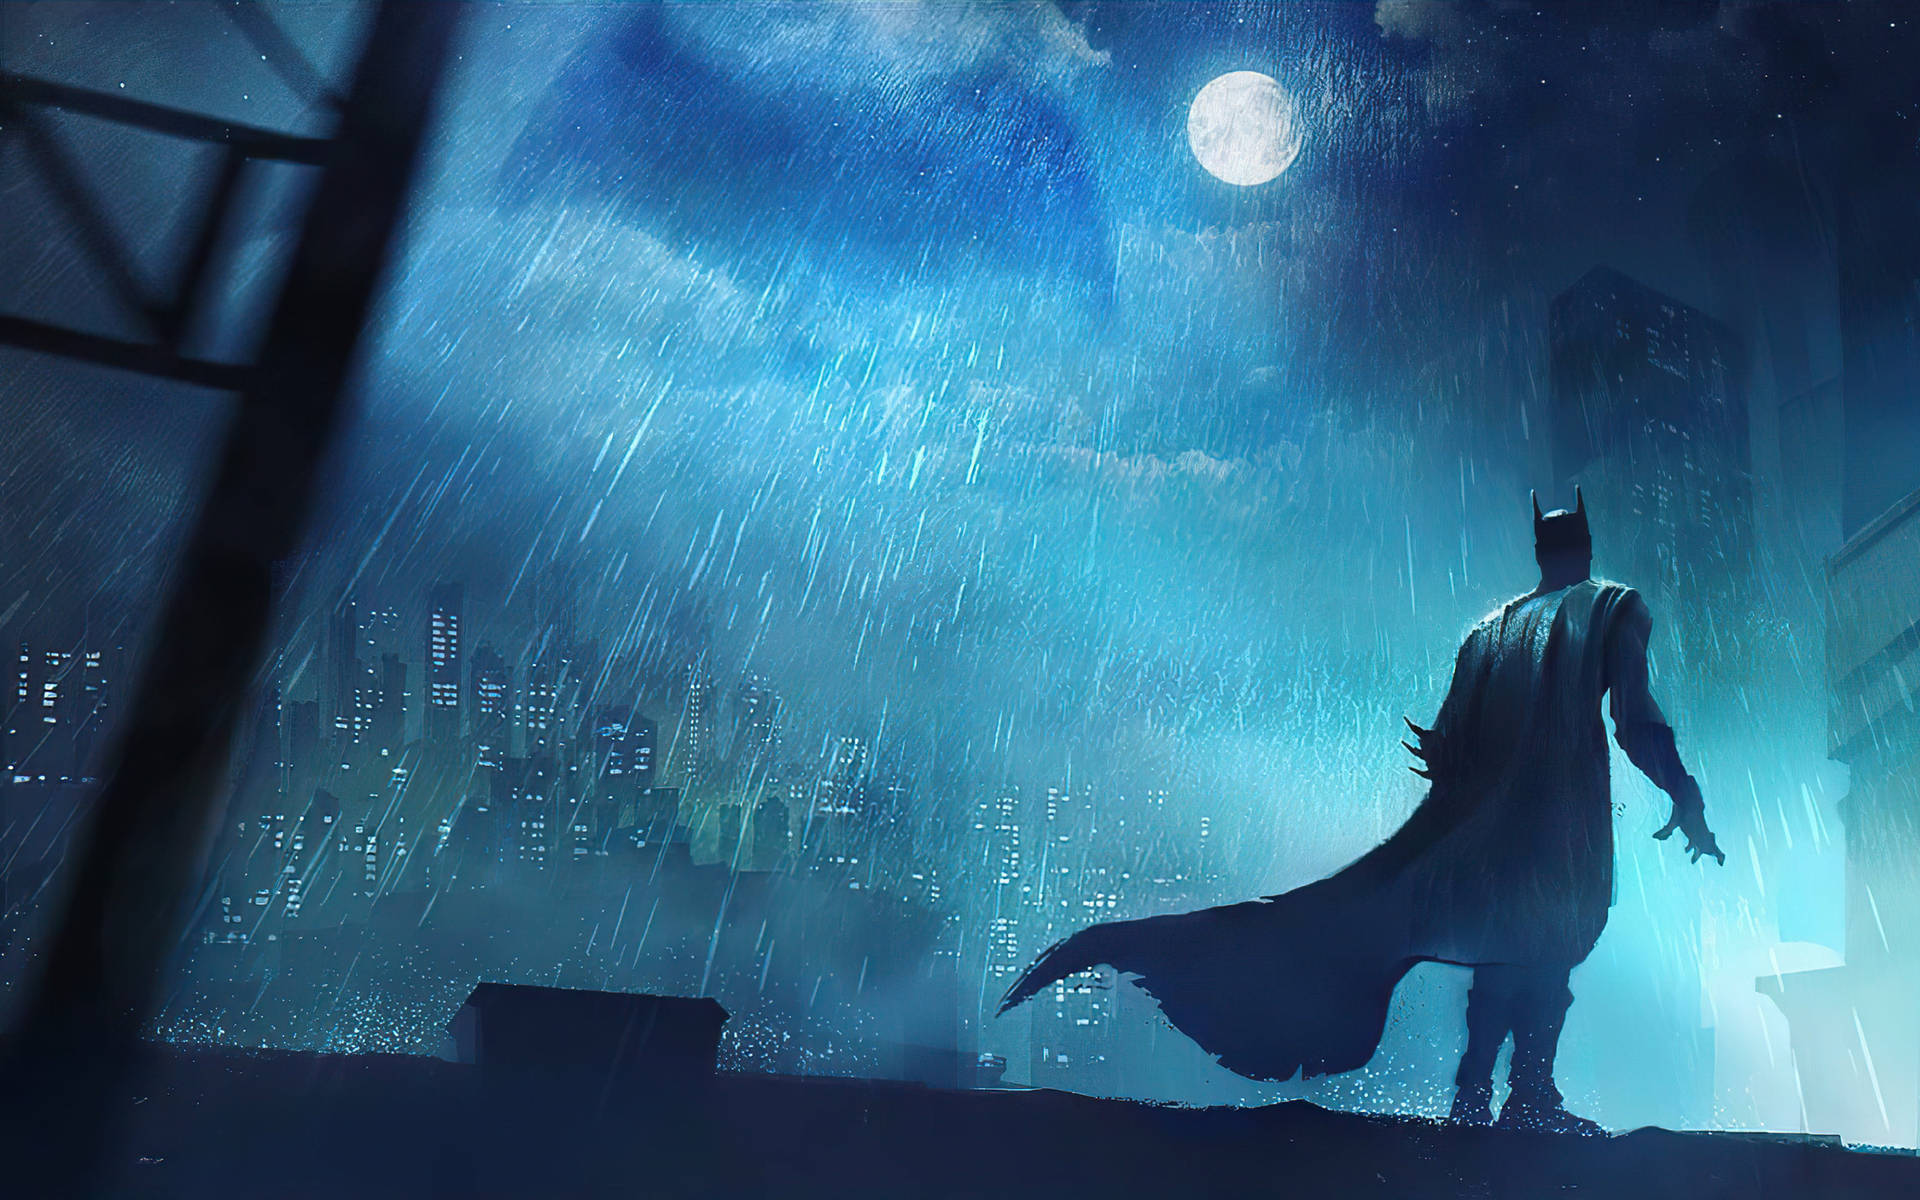 Batman In The Rain For Phone Background